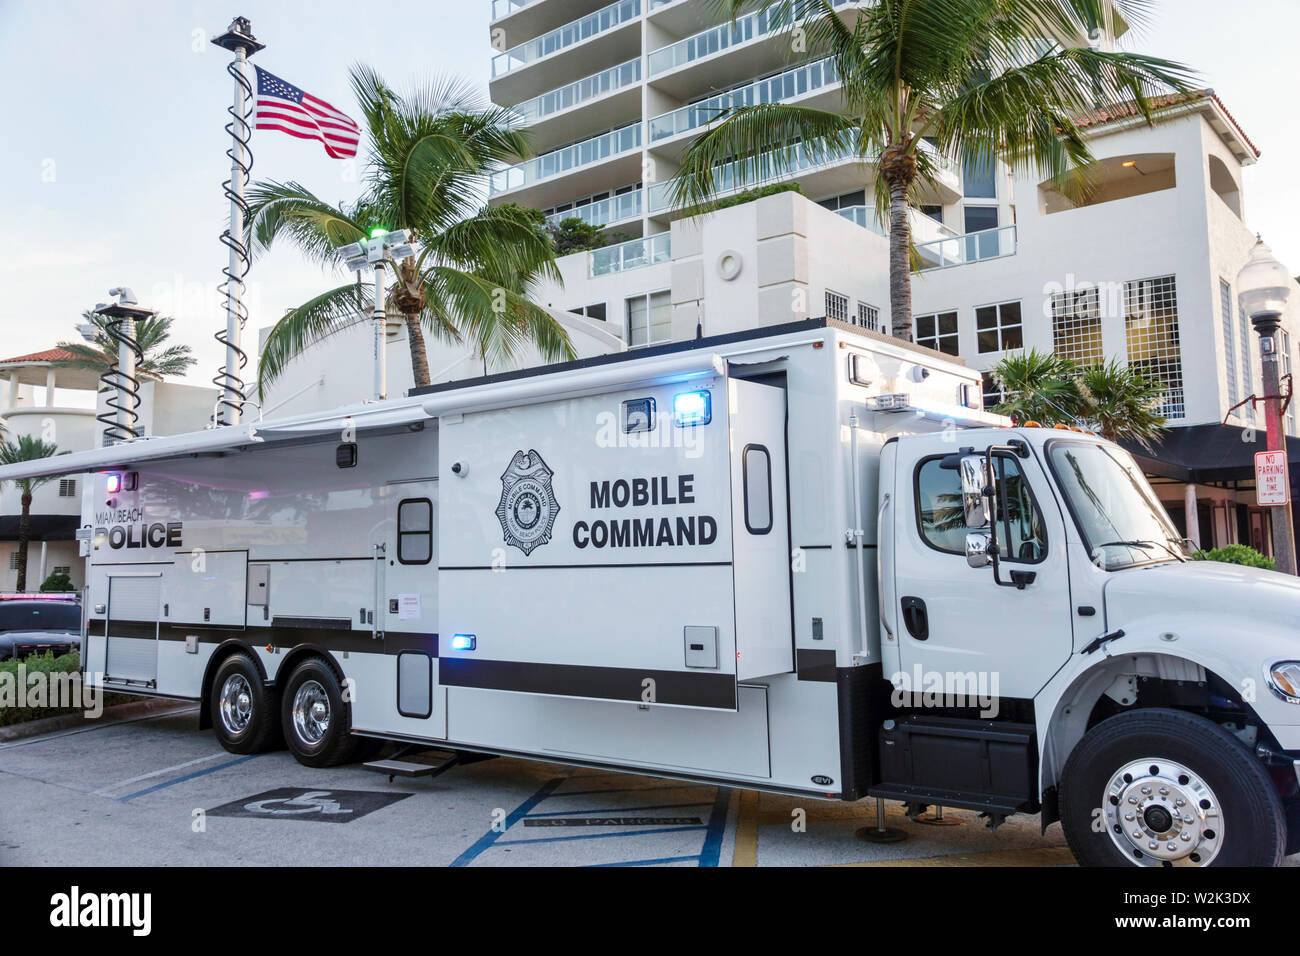 Miami Beach Florida,North Beach,Fire on the Fourth Festival July 4th annual police presence,Mobile Command vehicle,FL190704068 Stock Photo